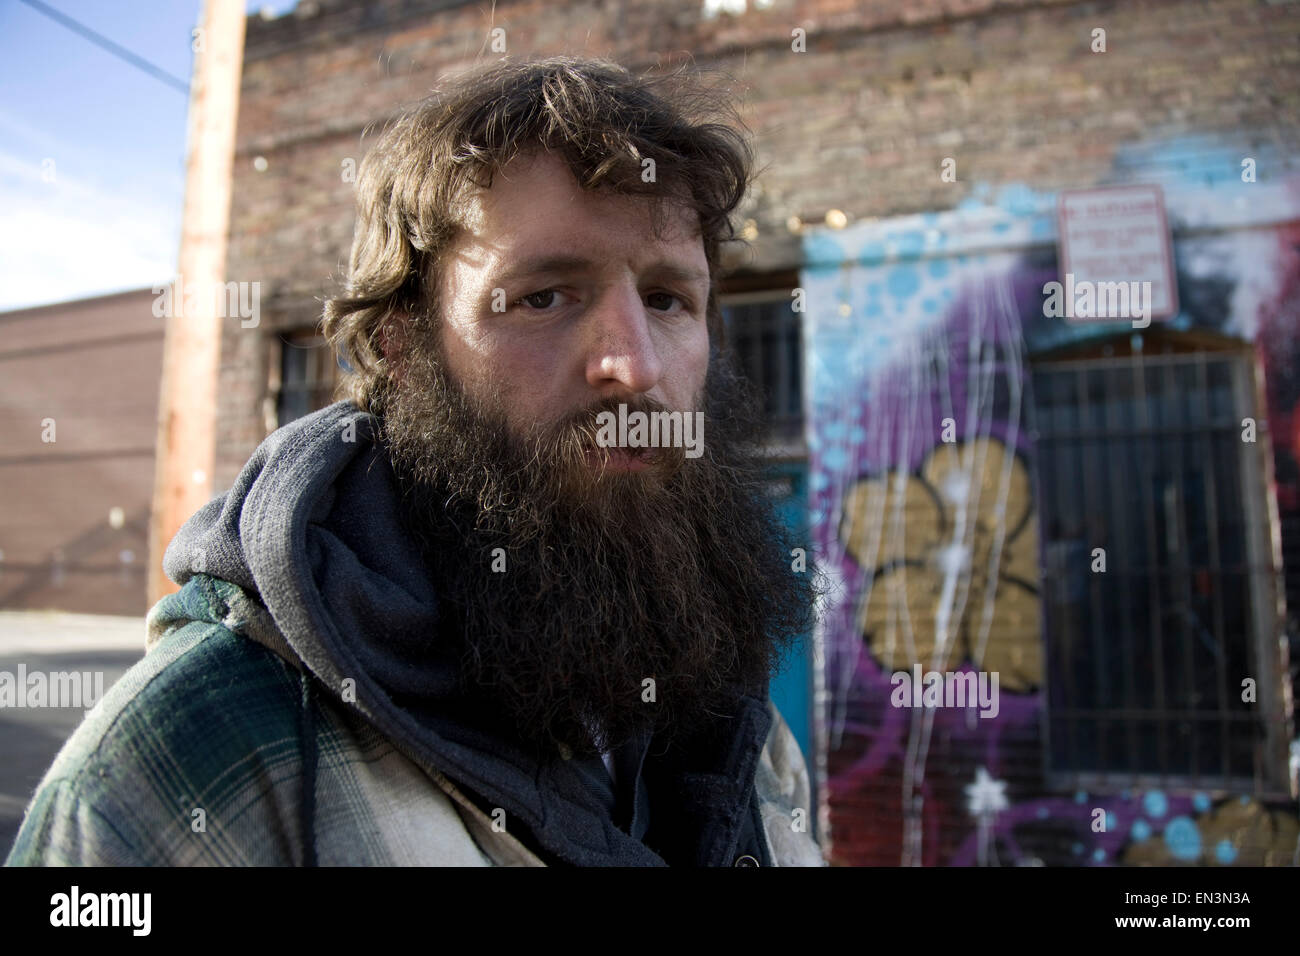 USA, Utah, Satl Lake City, portrait of homeless man Stock Photo